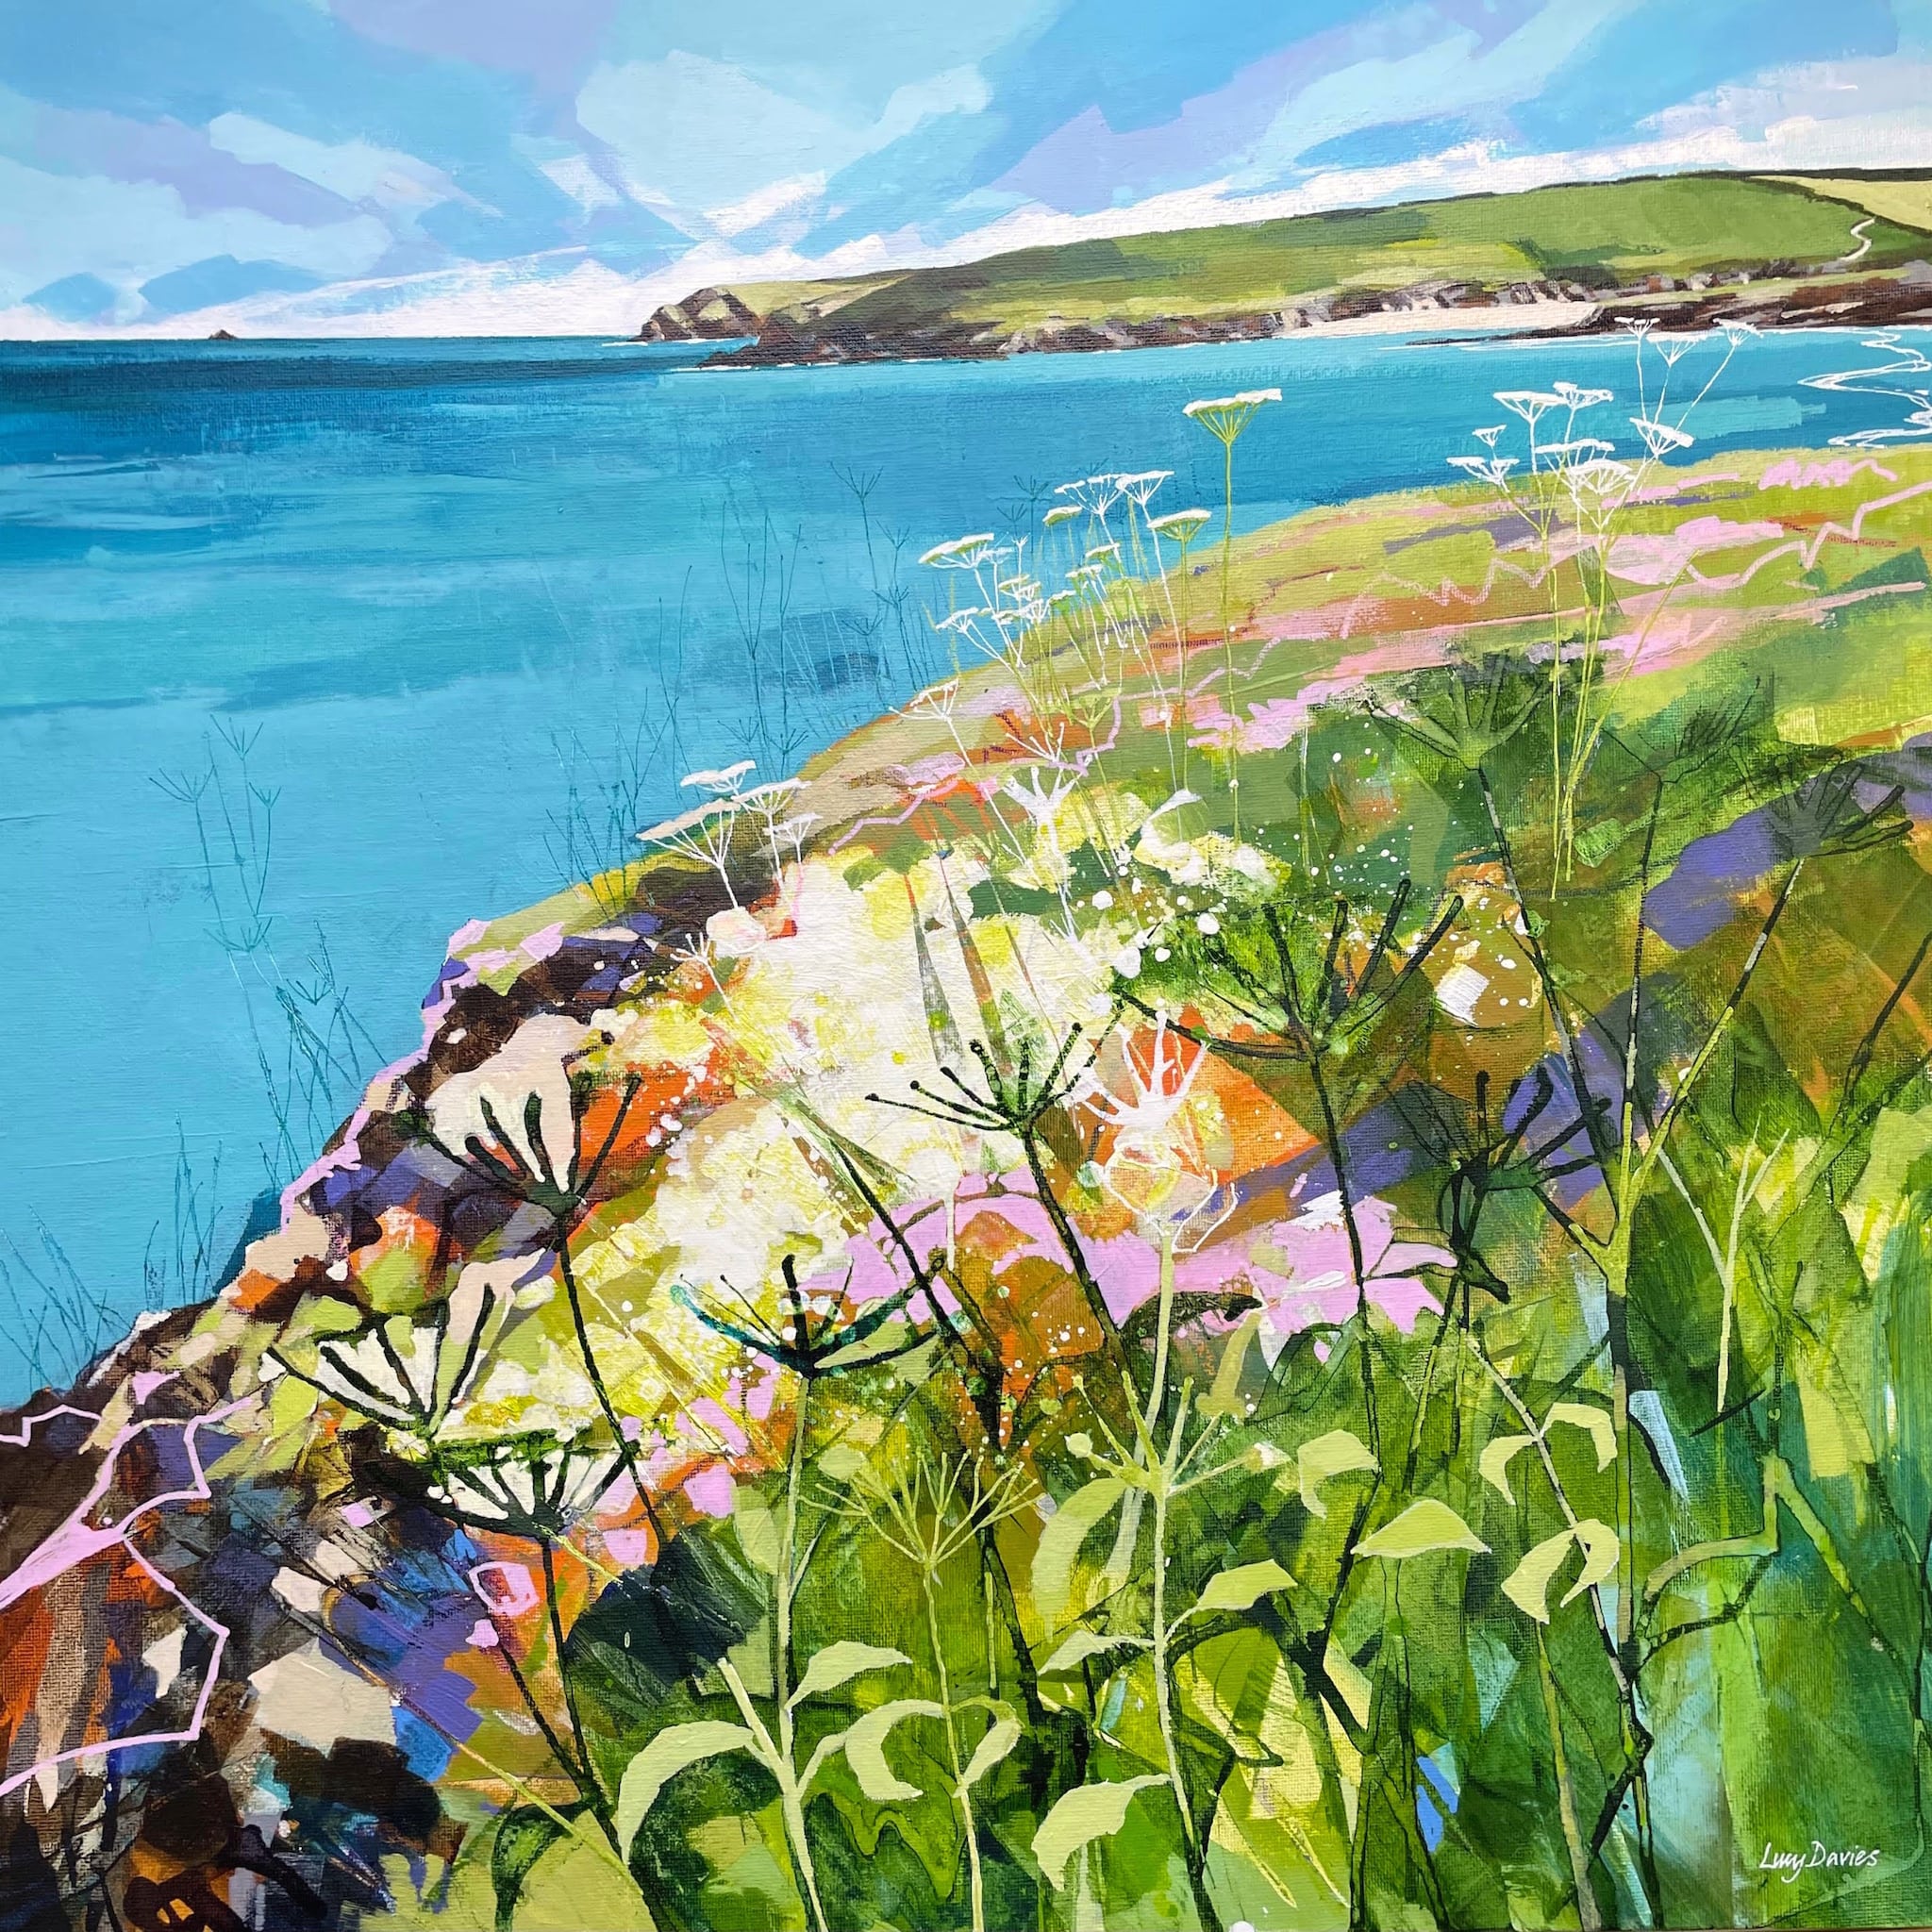 Painting of the cornish coast near Trevone by artist Lucy Davies